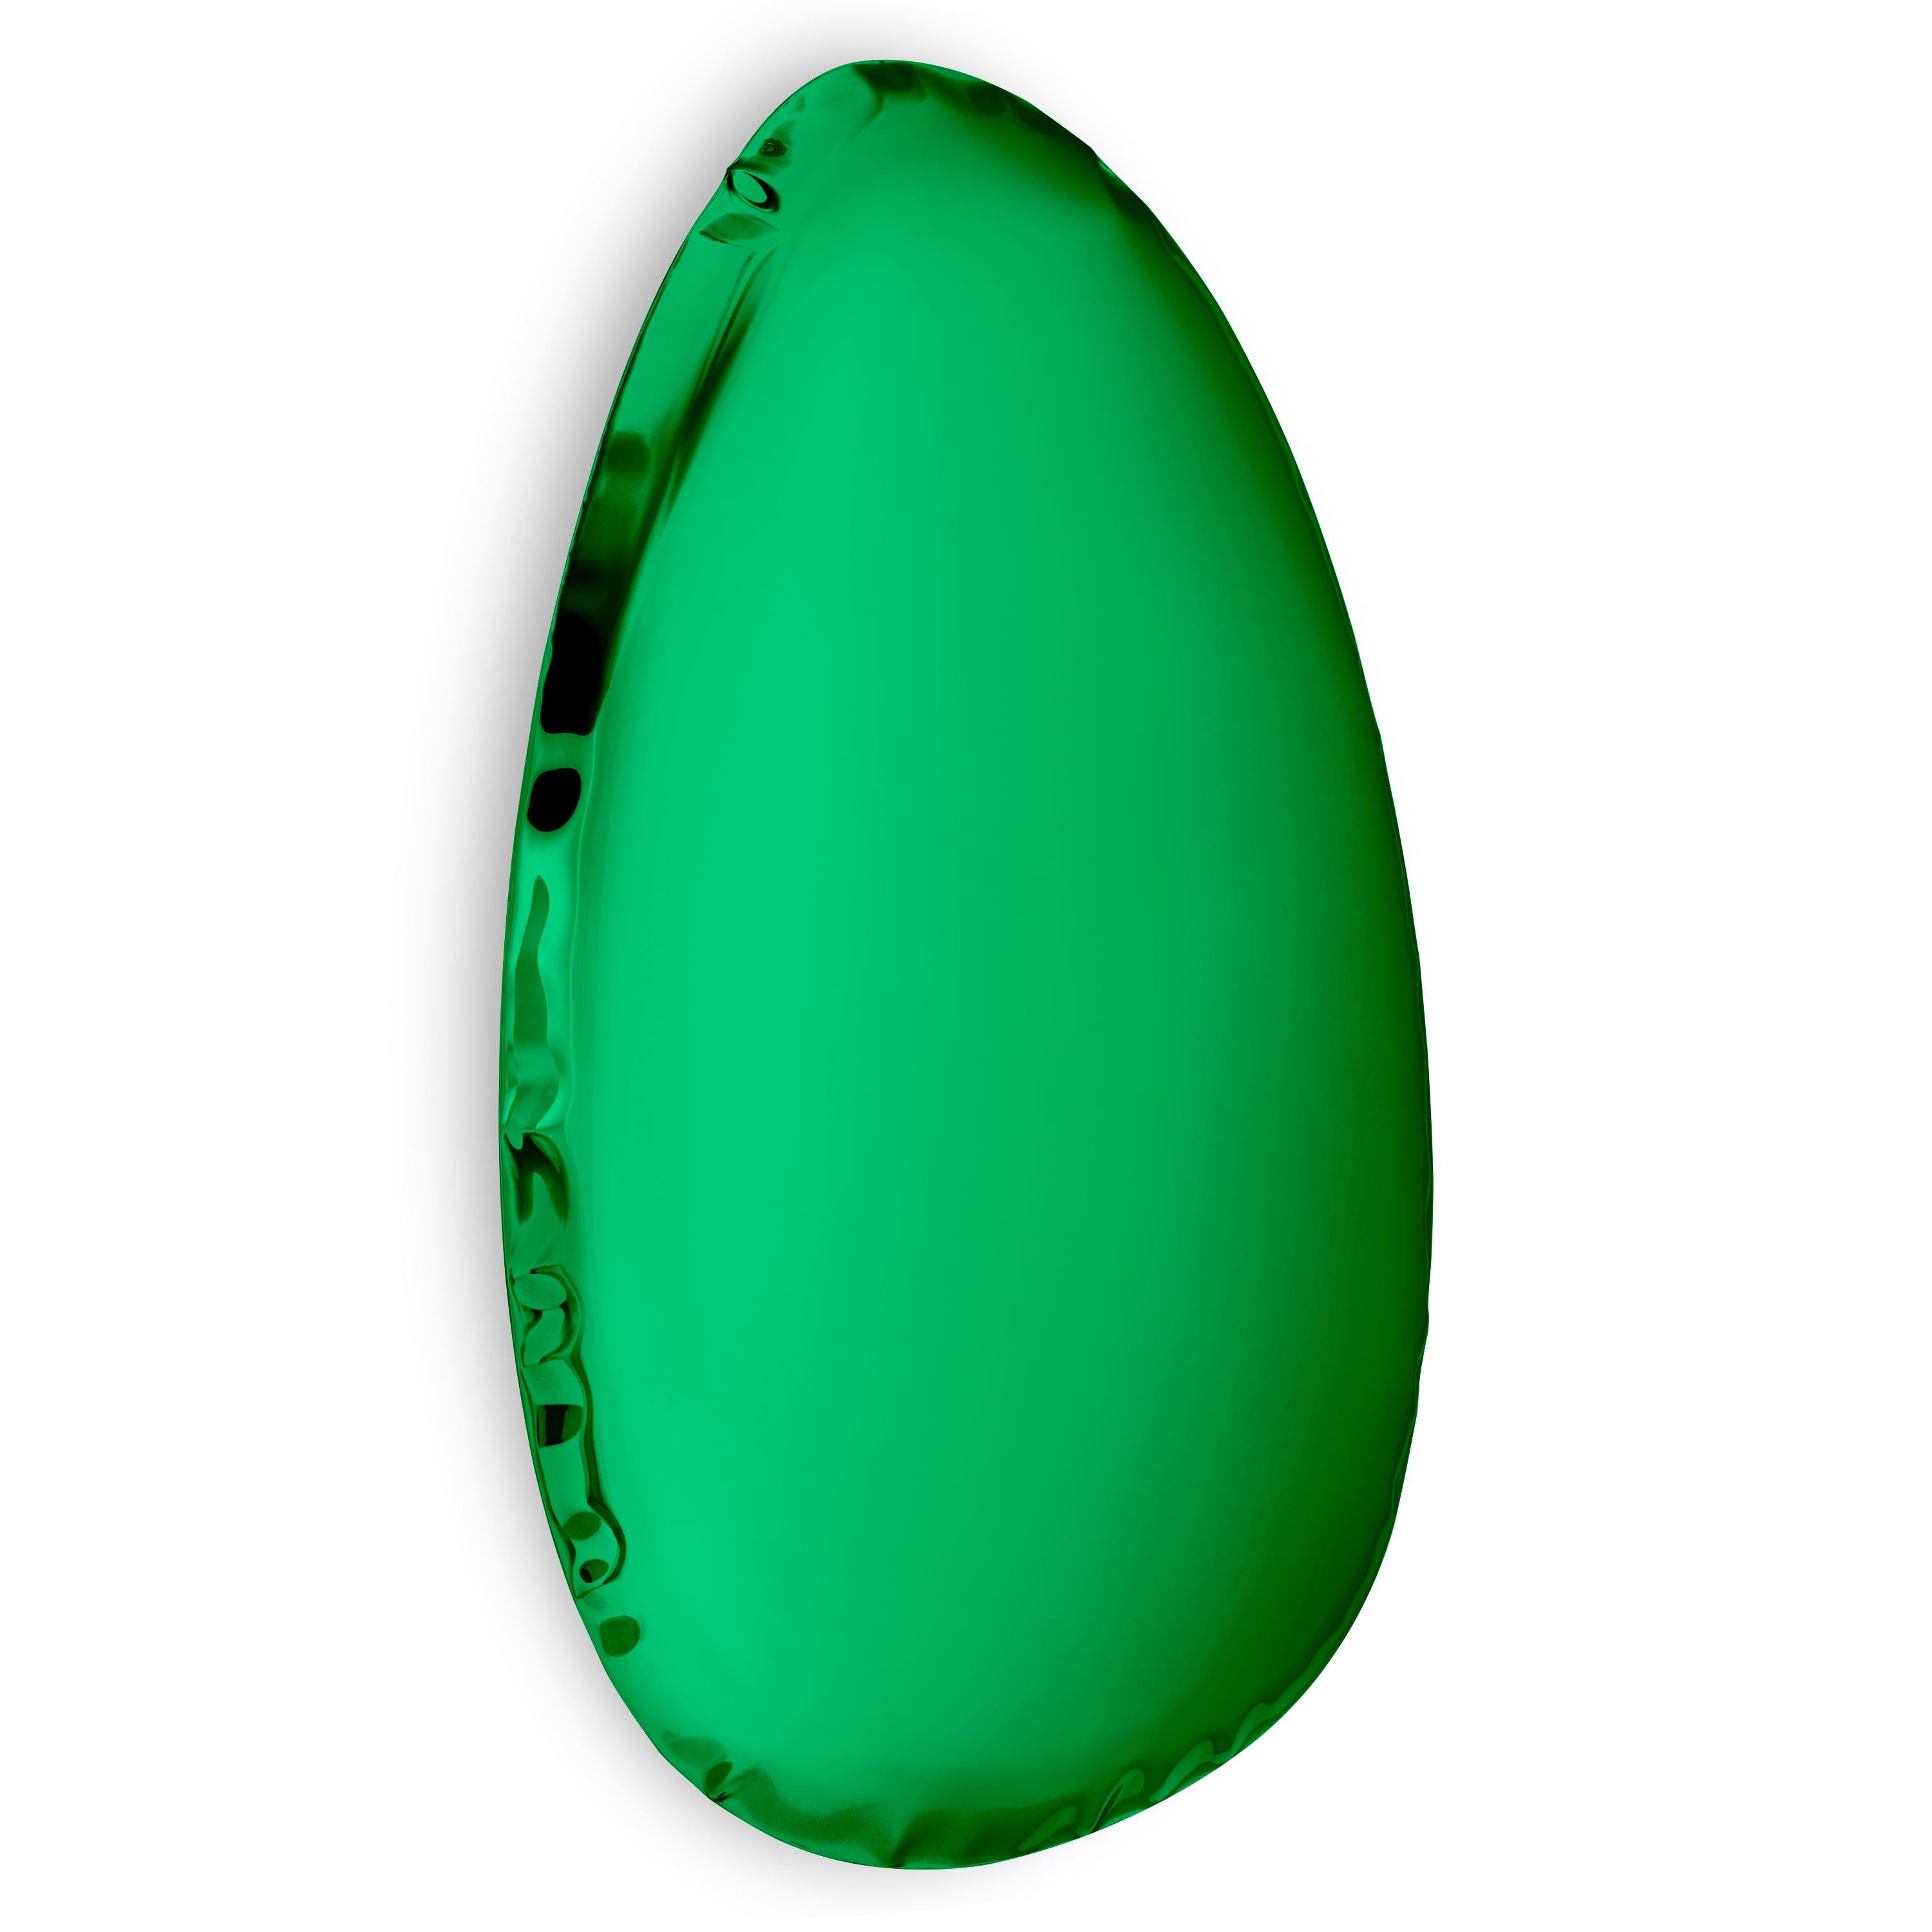 Emerald Tafla O4.5 wall mirror by Zieta
Dimensions: D 6 x W 57 x H 86 cm 
Material: Stainless steel.
Finish: Emerald. 
Available finishes: Stainless steel, white matt, sapphire/emerald, sapphire, emerald, deep space blue, dark matter, or red rubin.